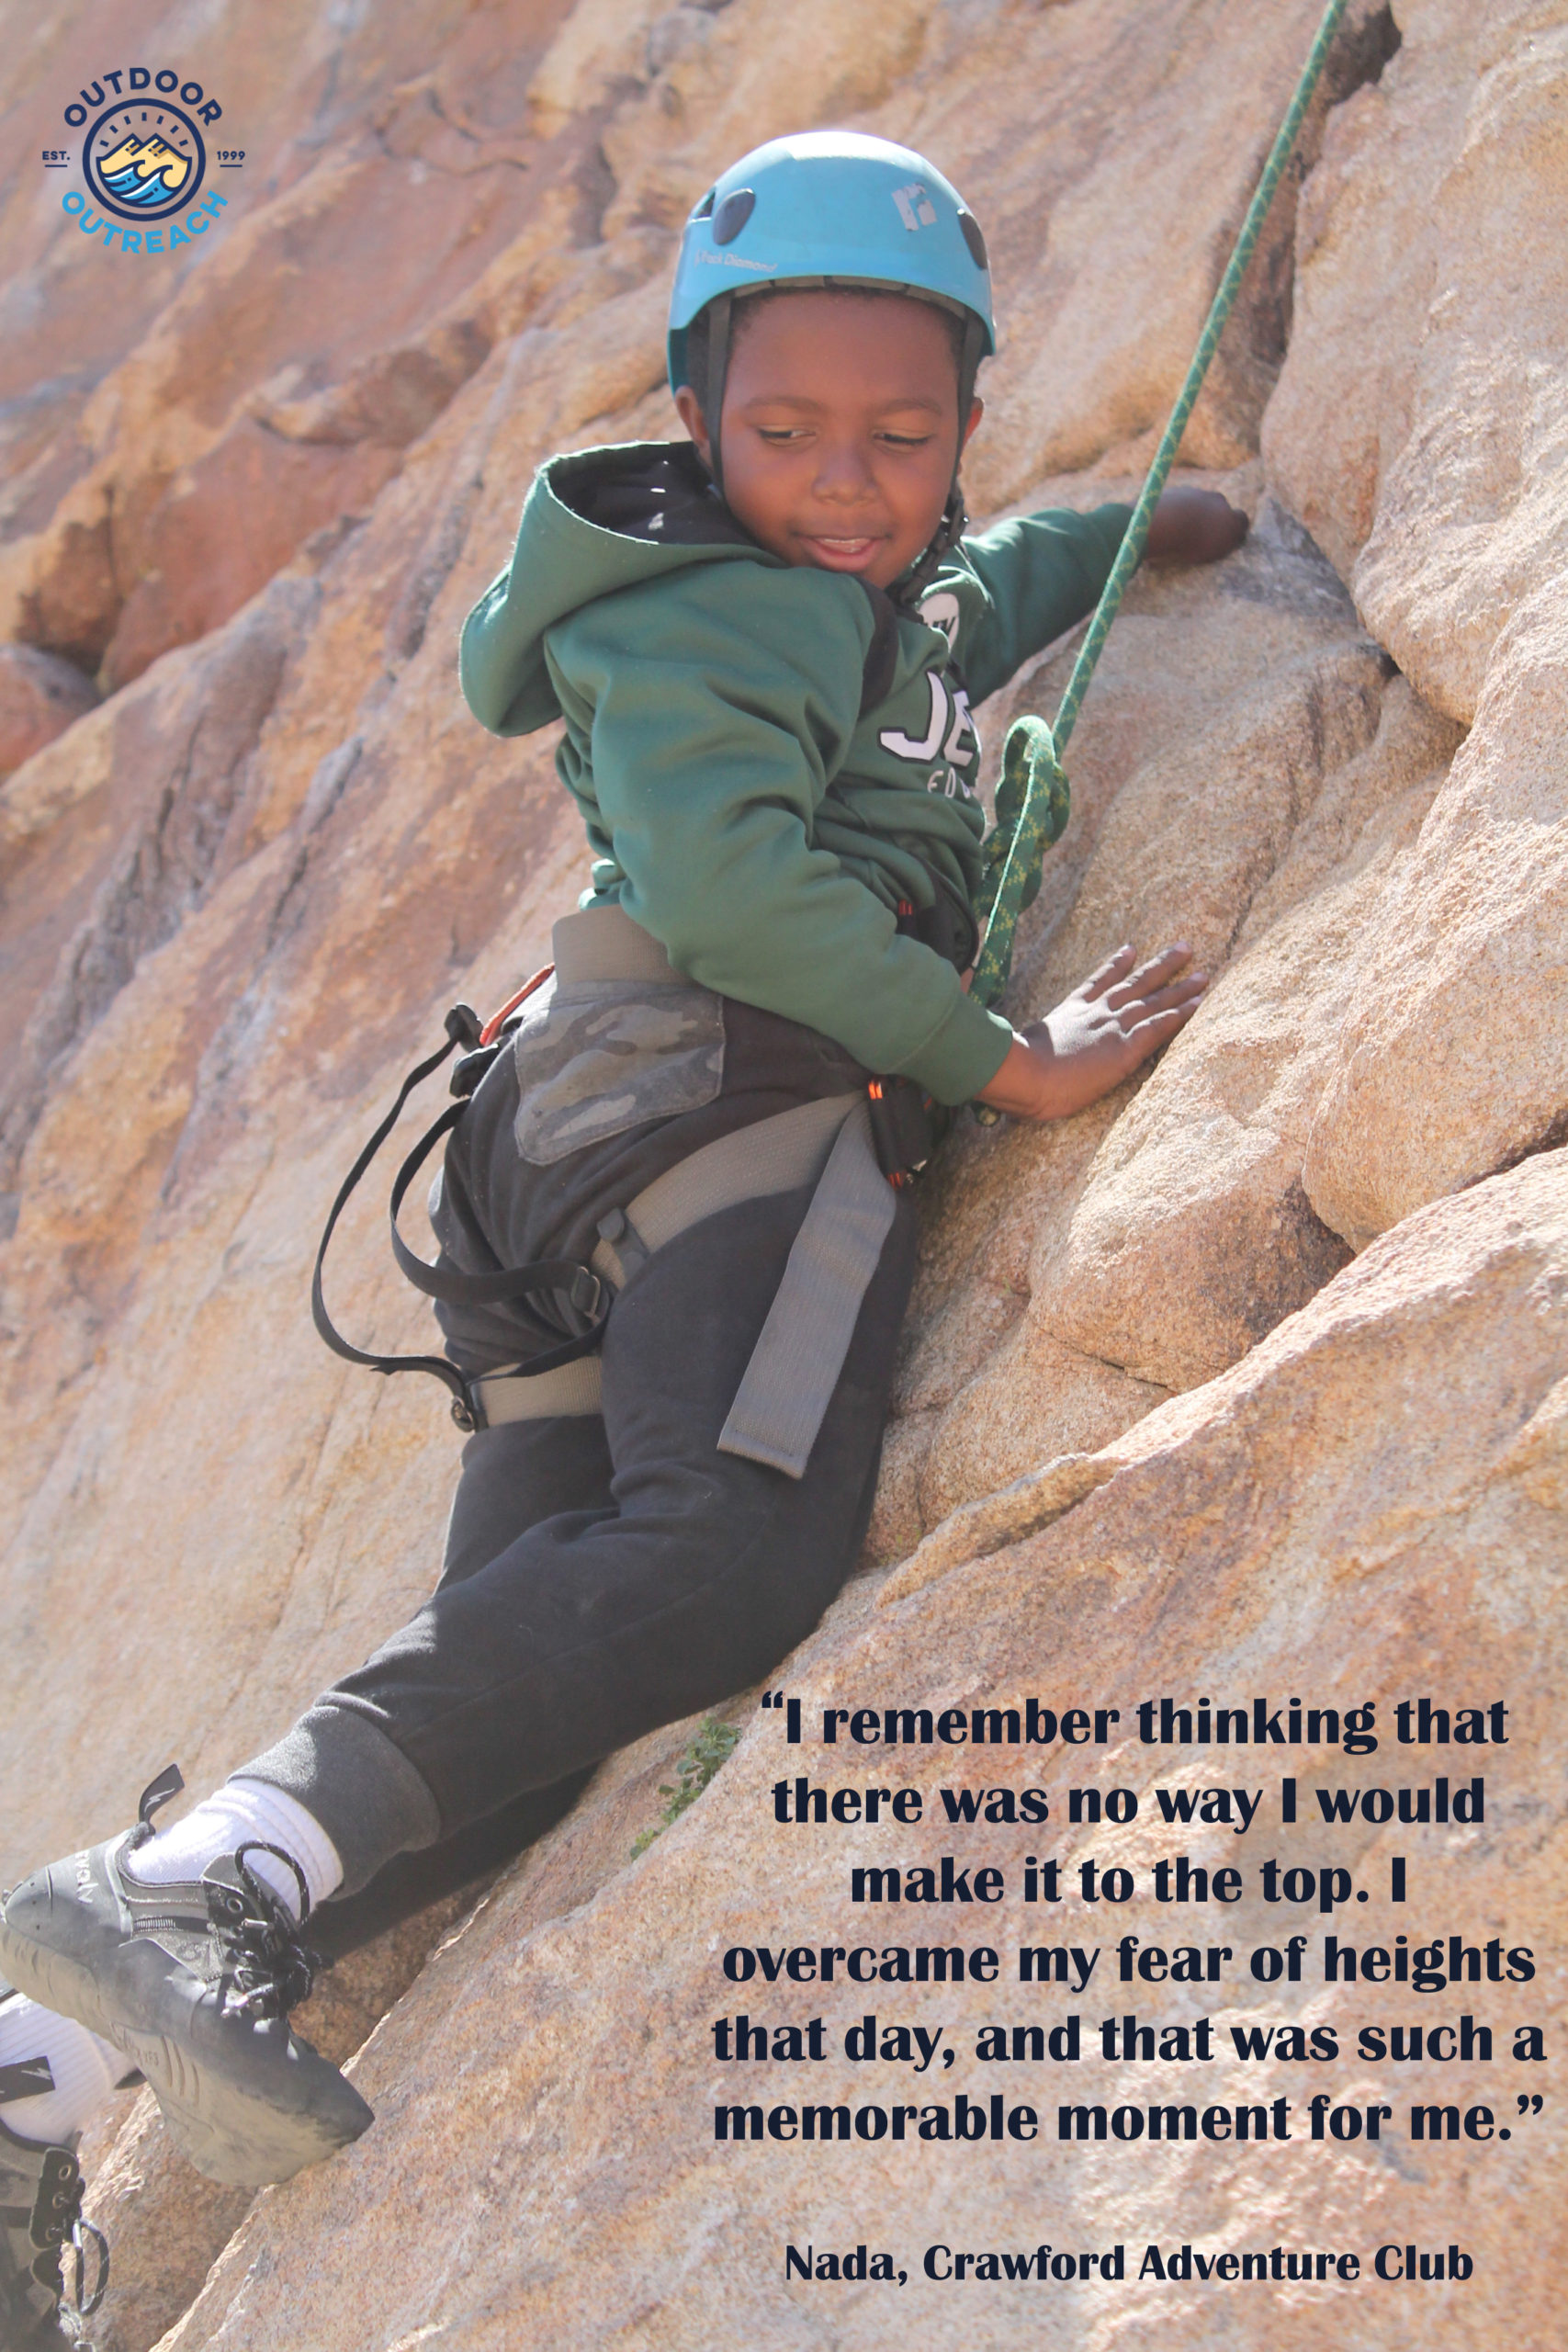 Why do we rock climb?